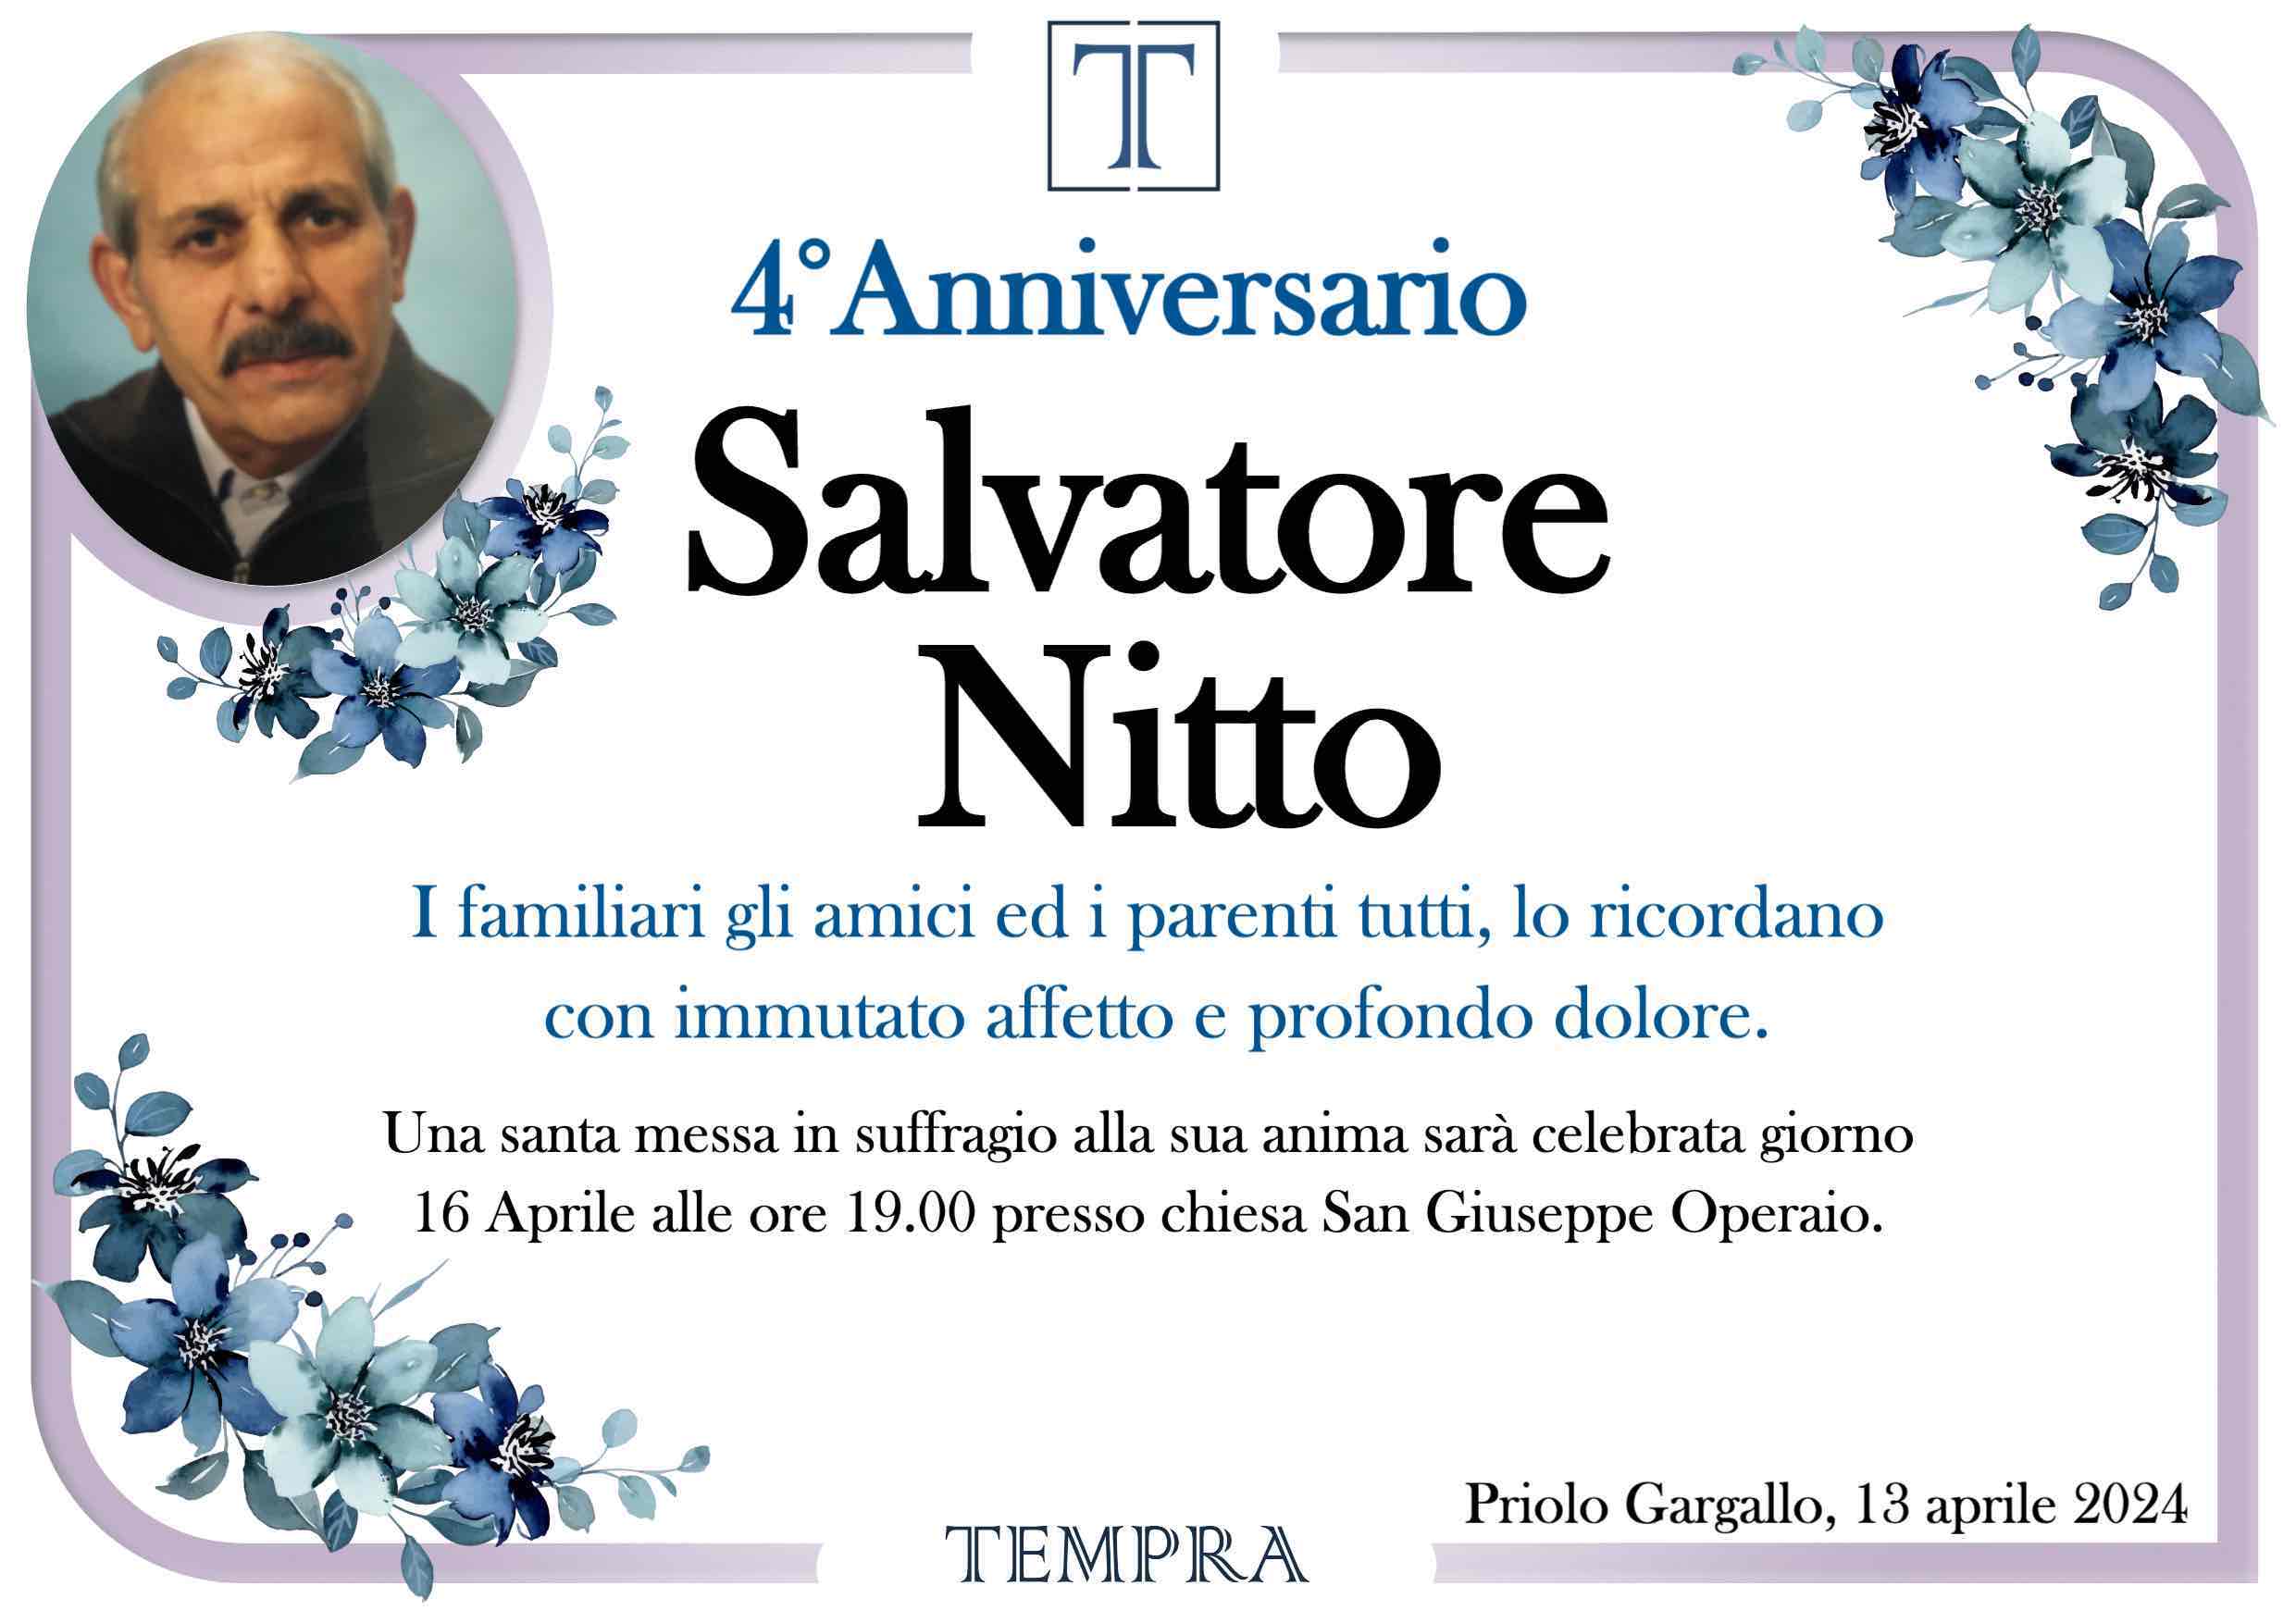 Salvatore Nitto